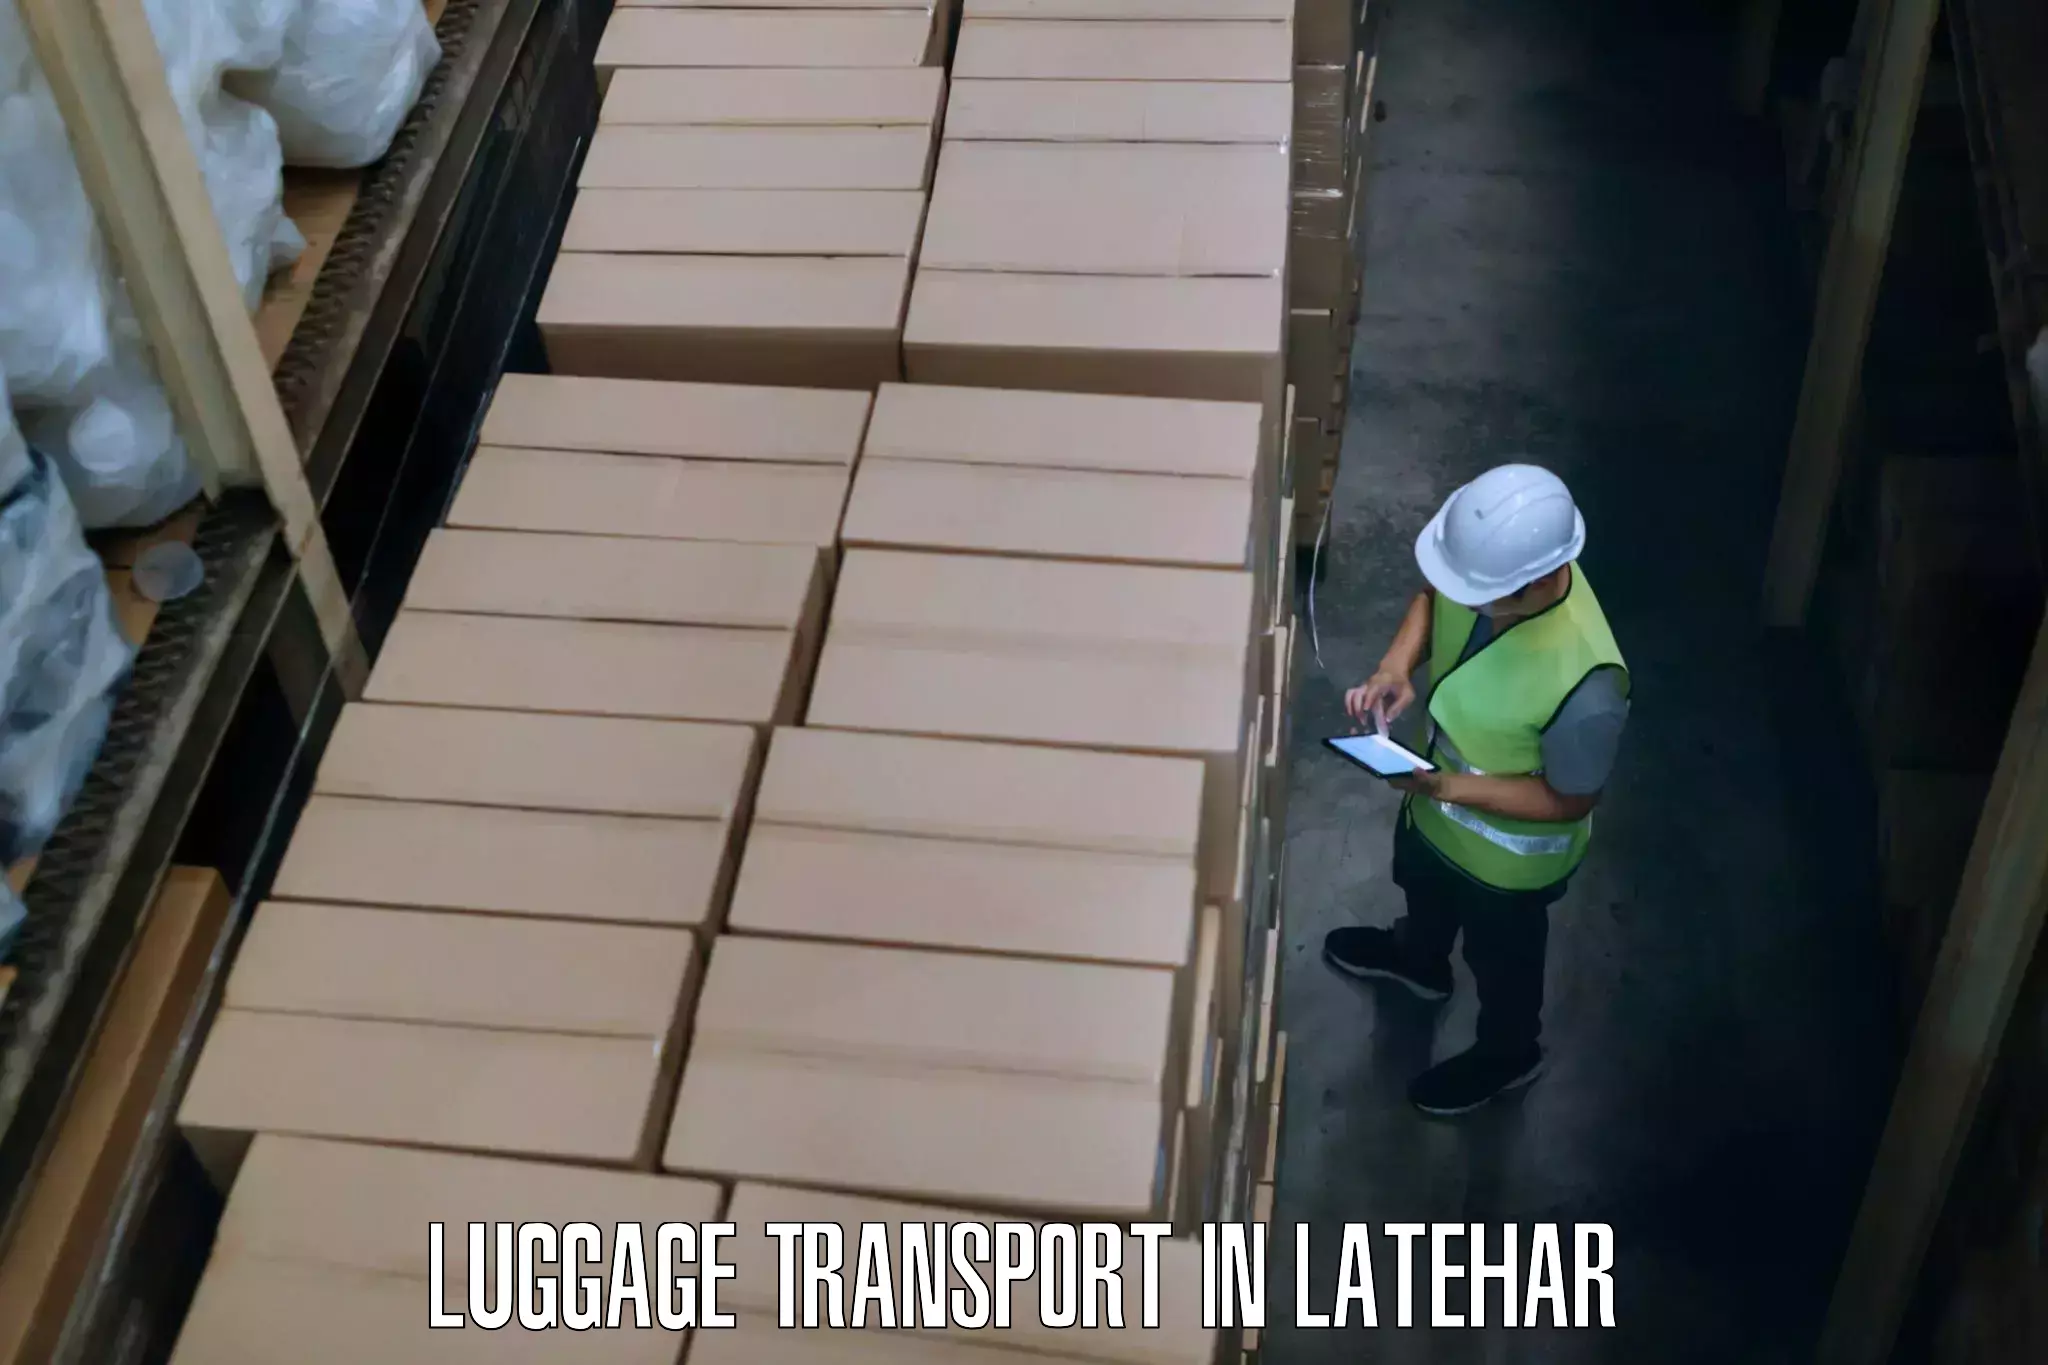 Luggage shipment processing in Latehar